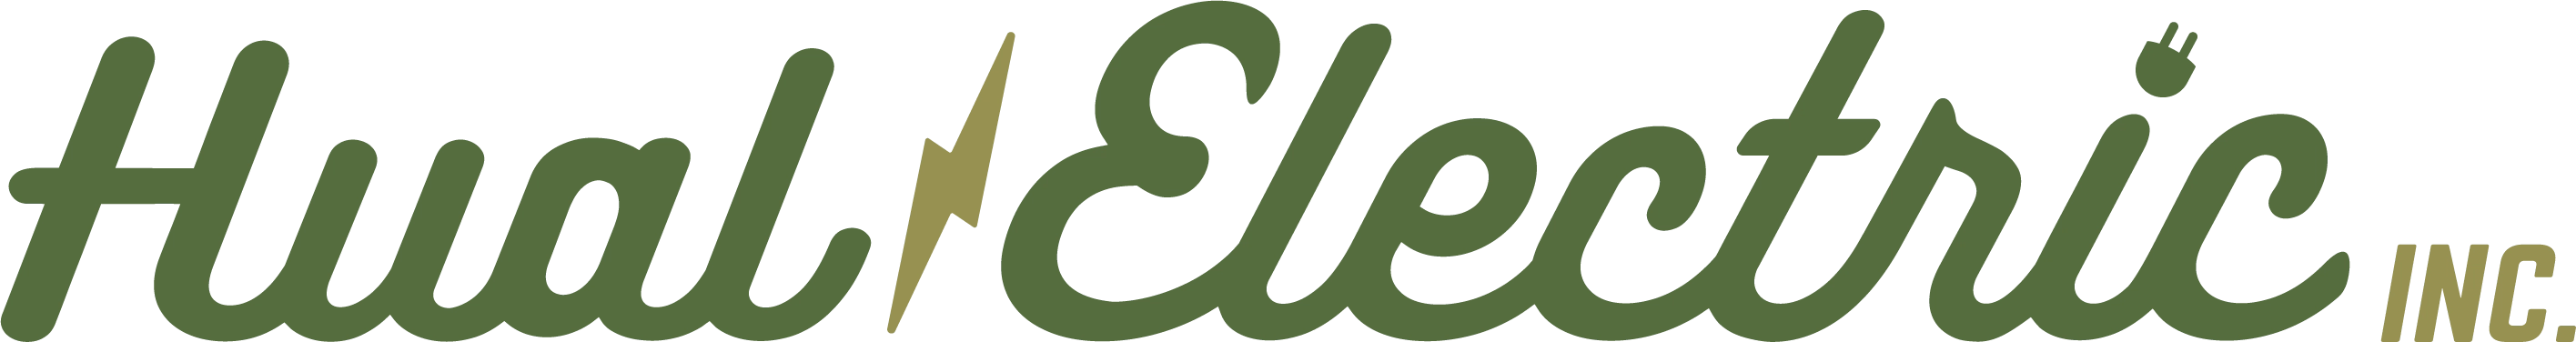 Hual Electric Inc Logo